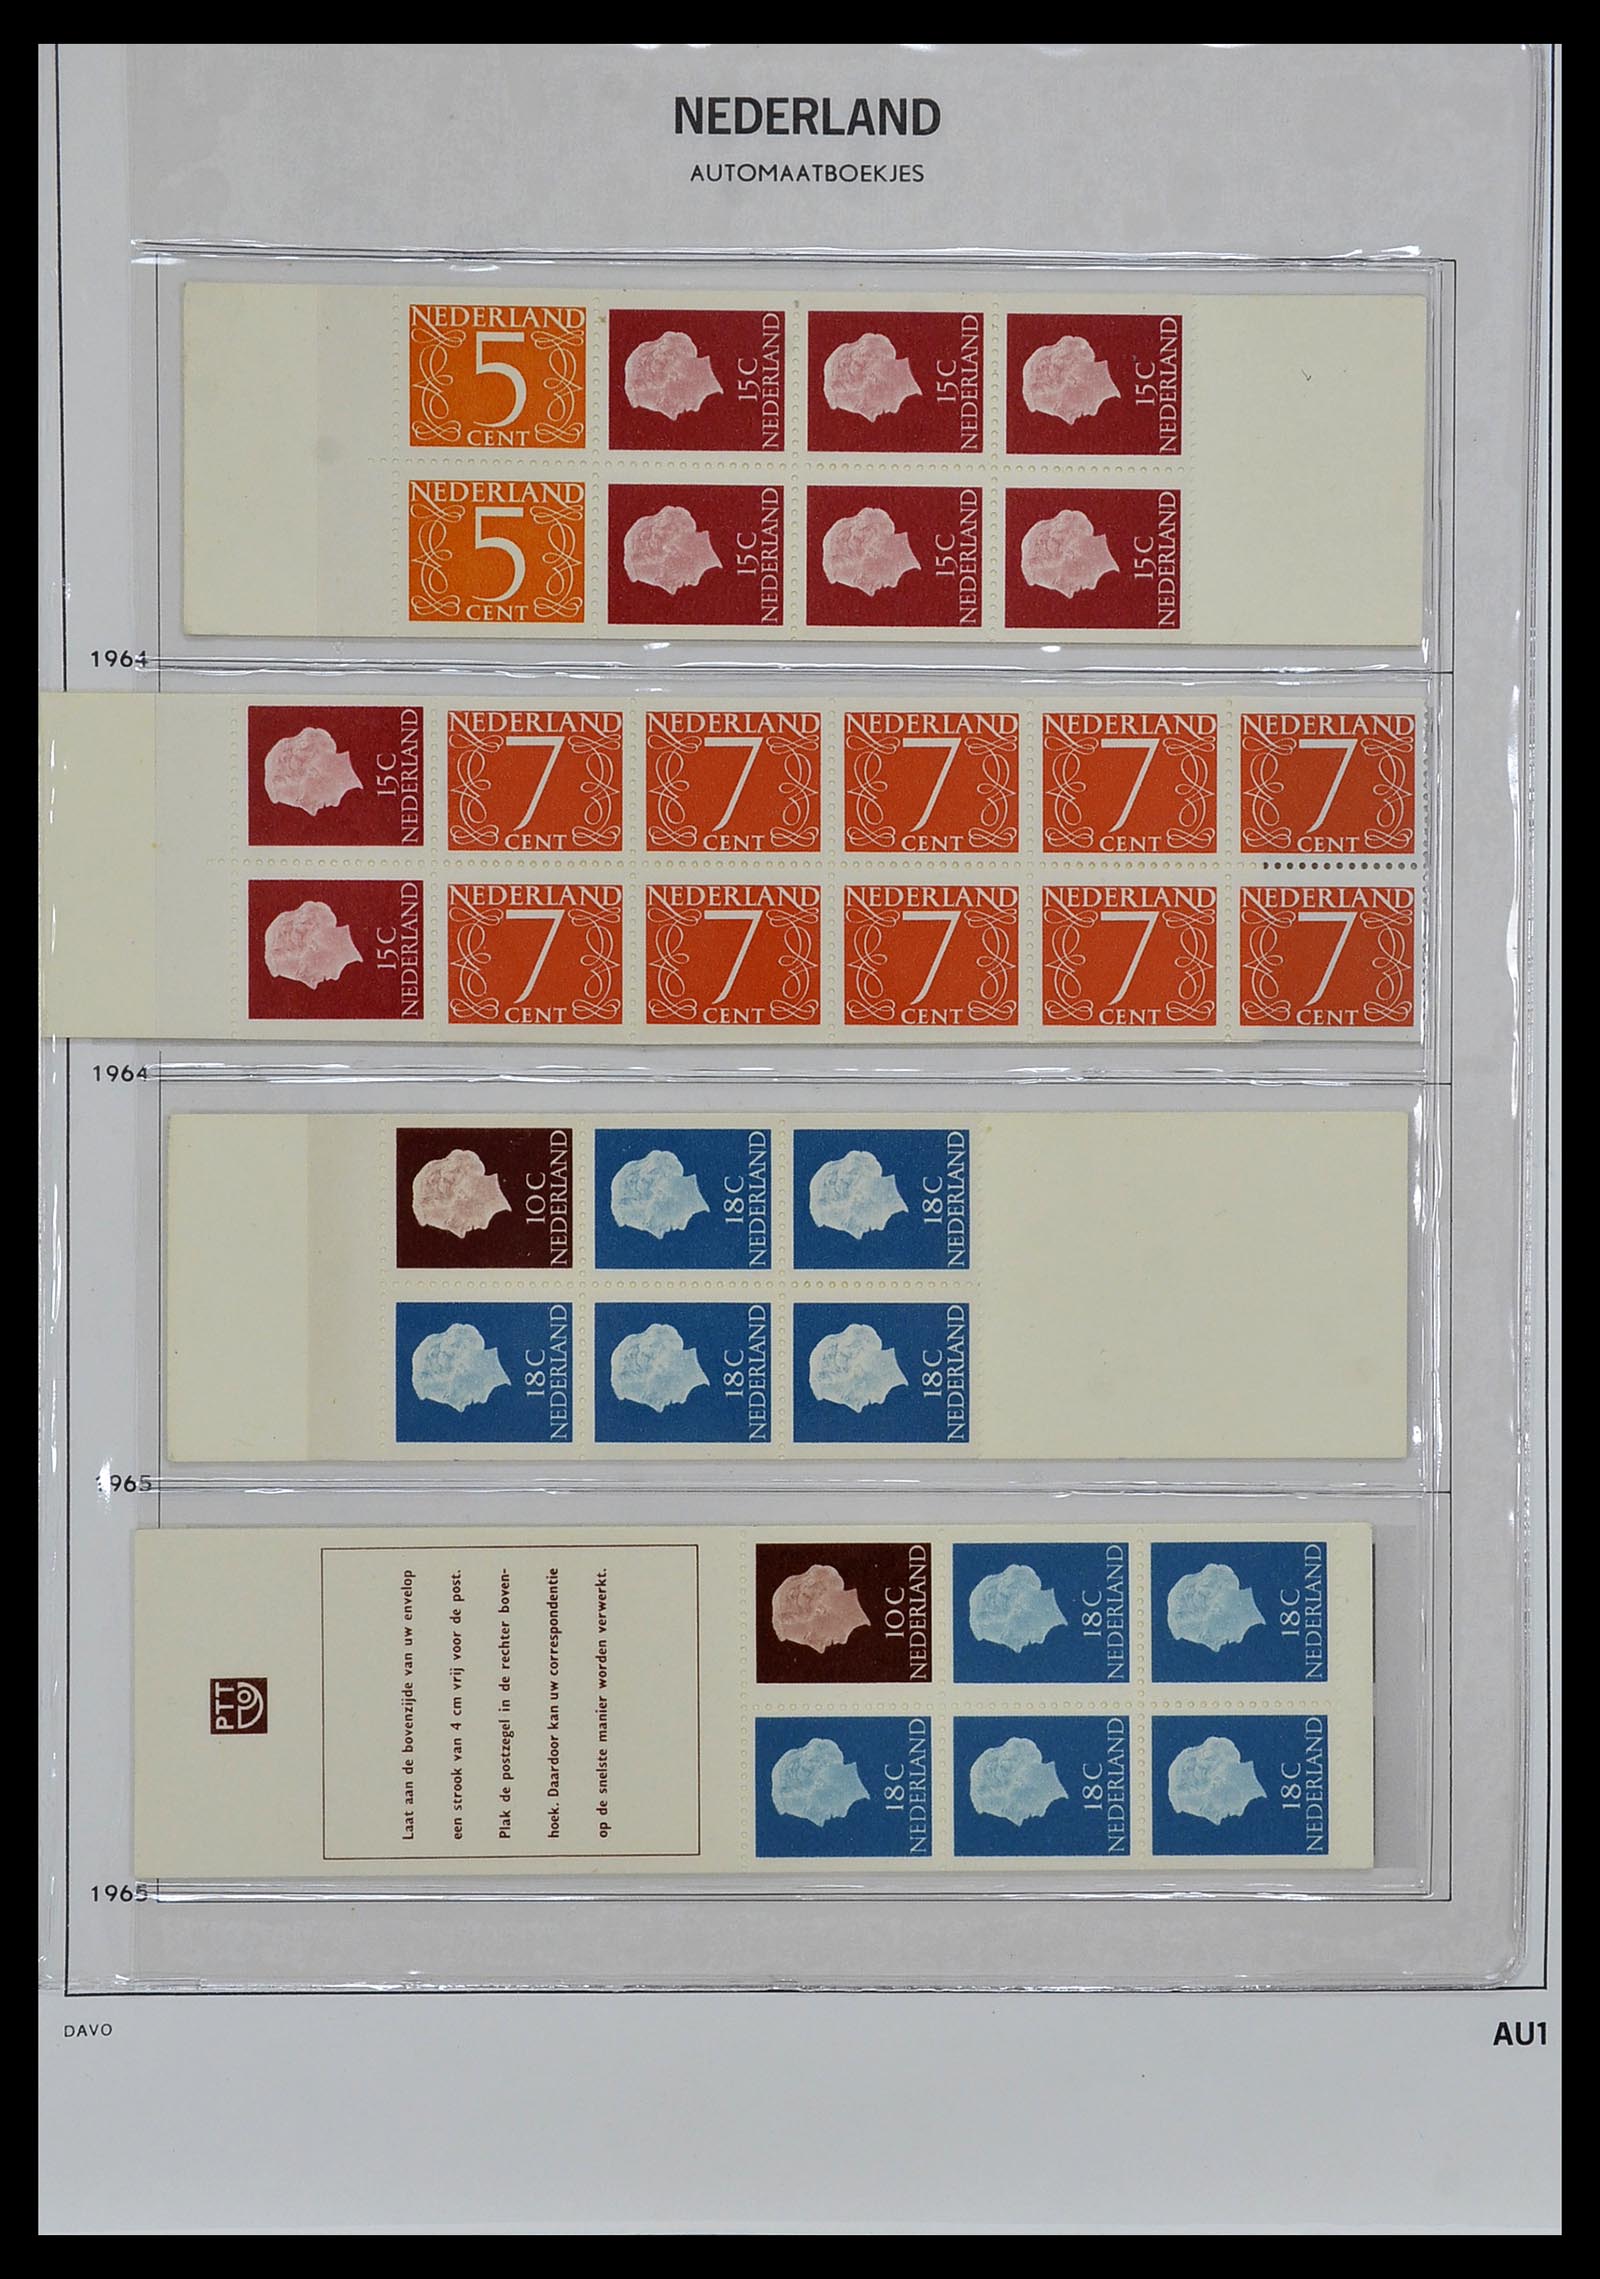 34267 001 - Stamp collection 34267 Netherlands stamp booklets 1964-1991.